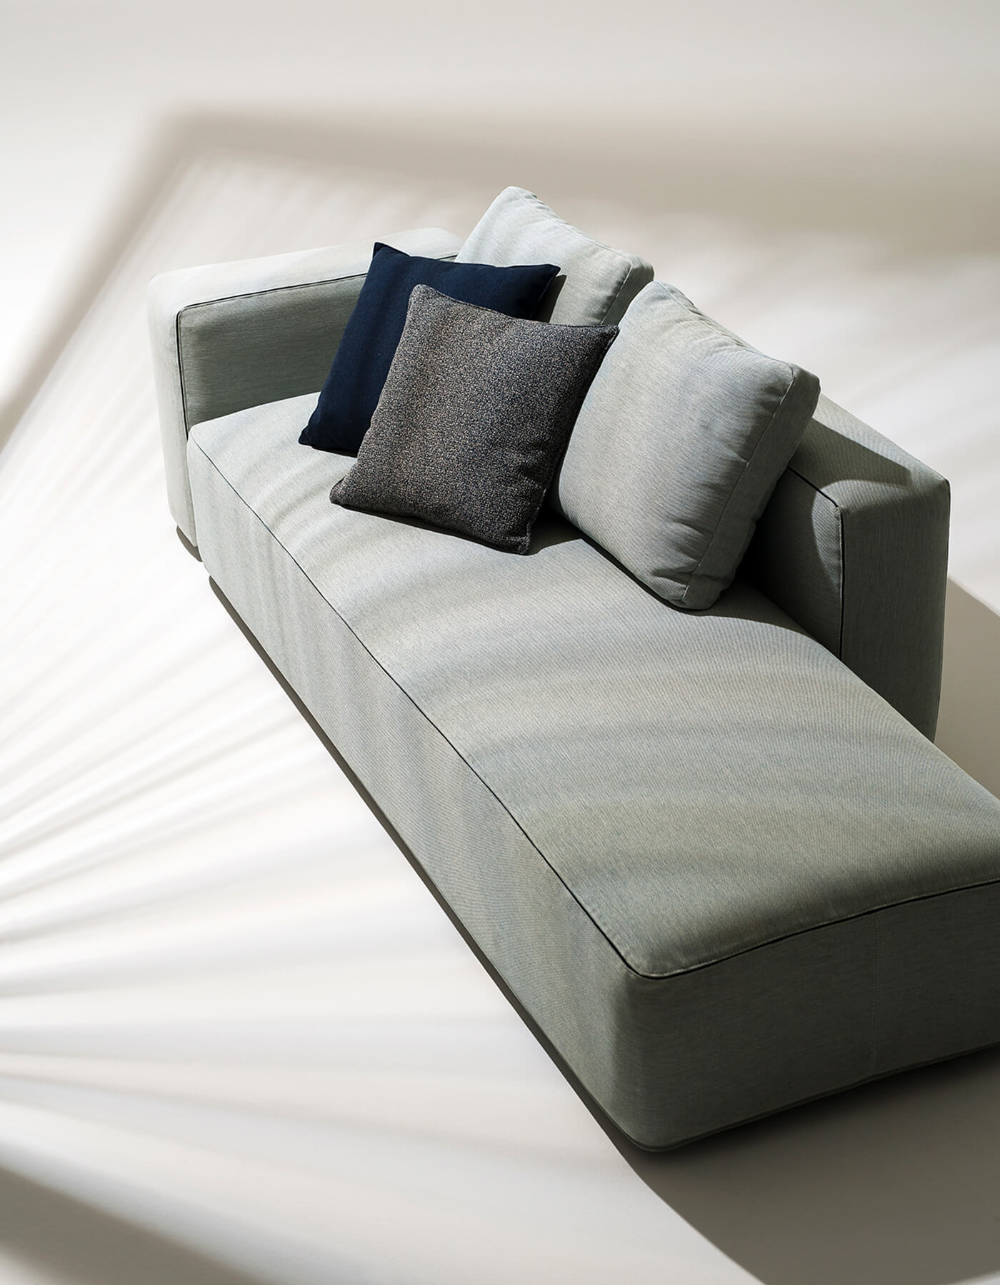 Enhance your sitting room with italian
sofa